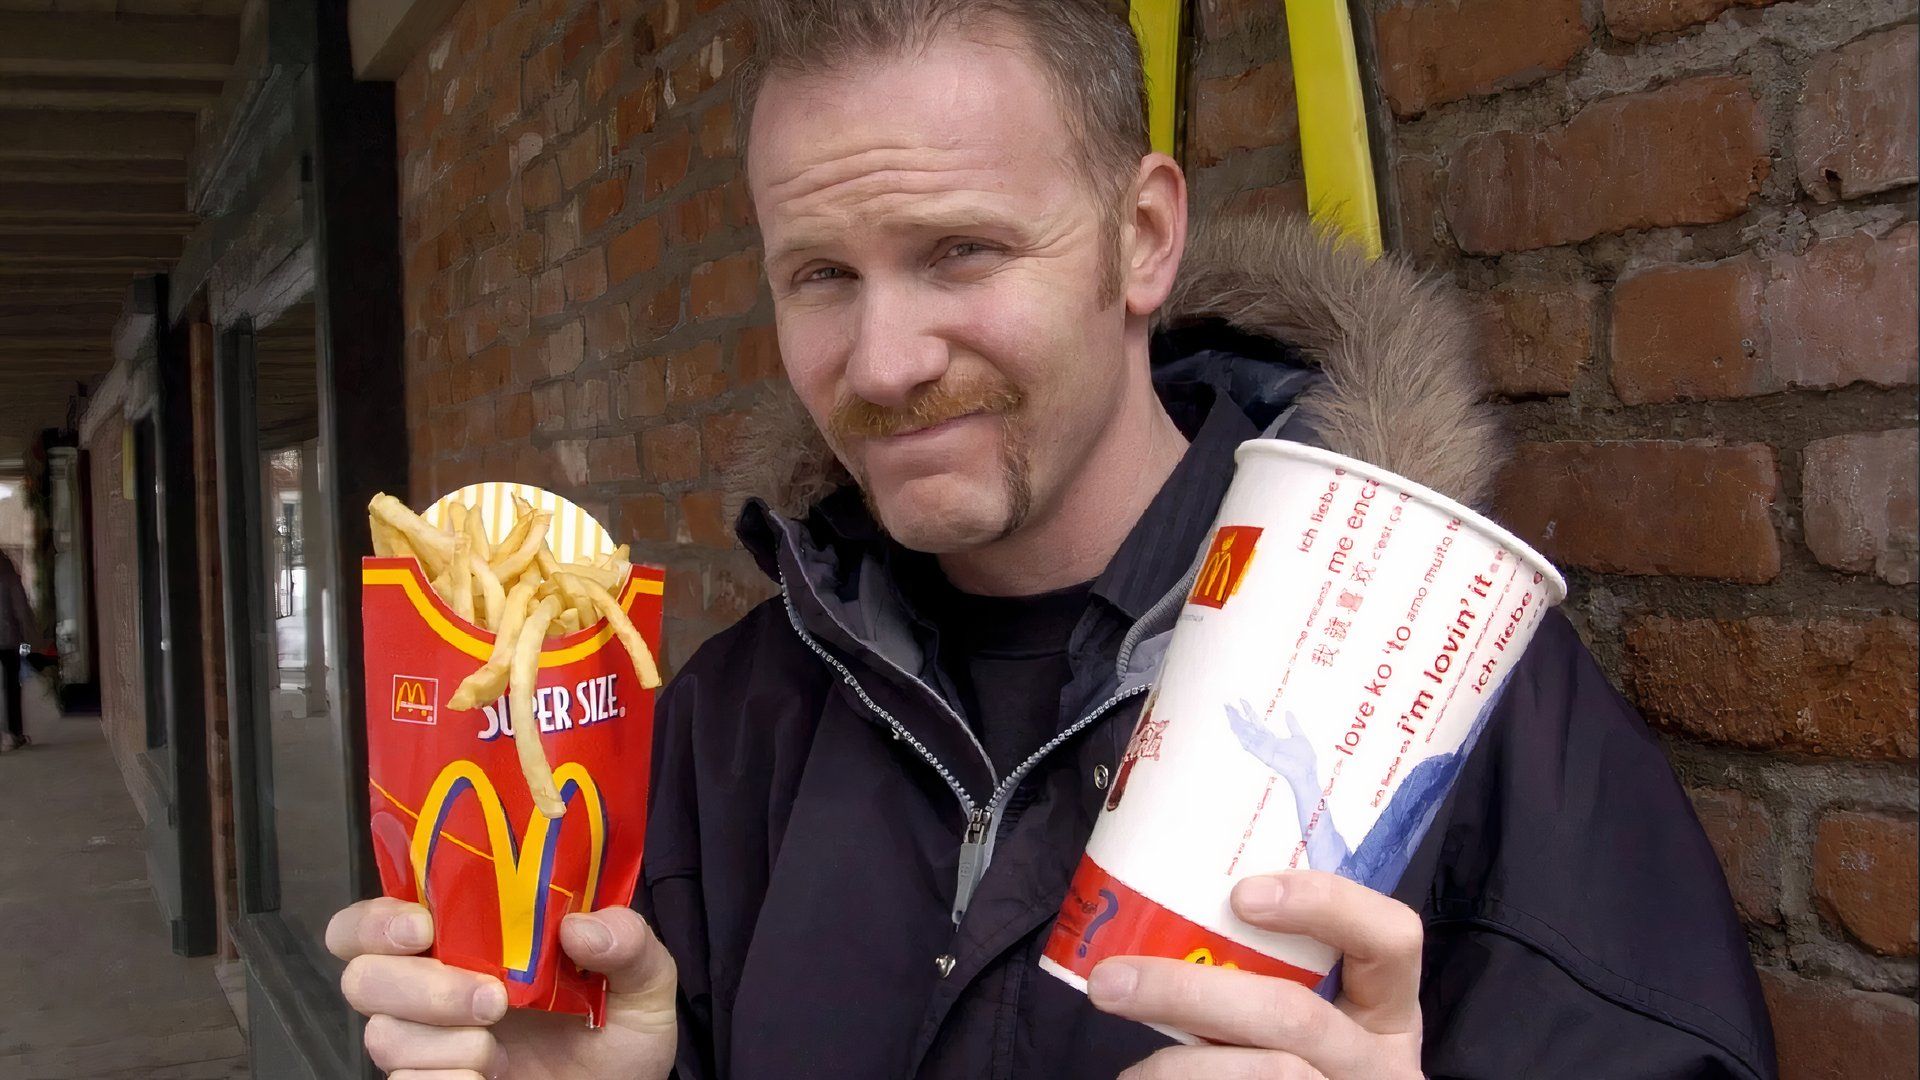 Morgan Spurlock holding fries and mcdonalds coke